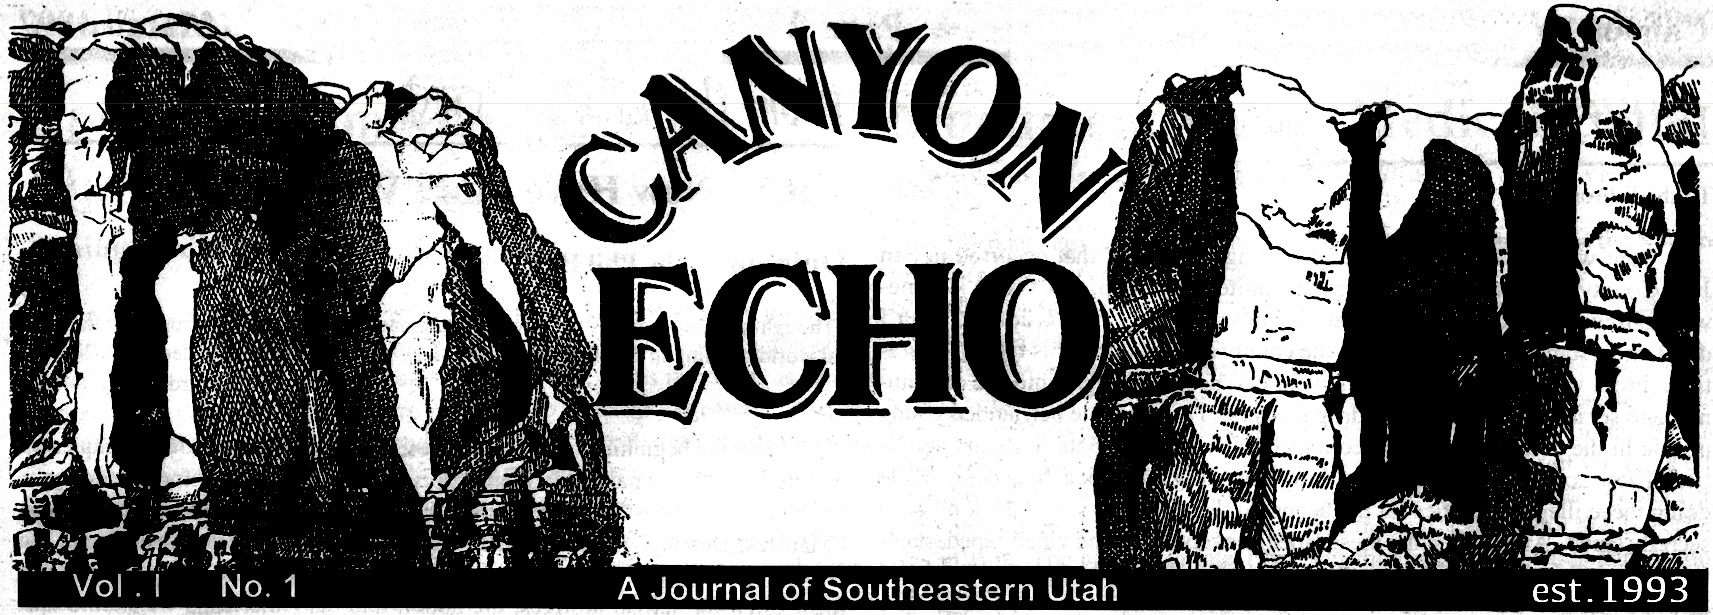 Canyon Echo Journal logo